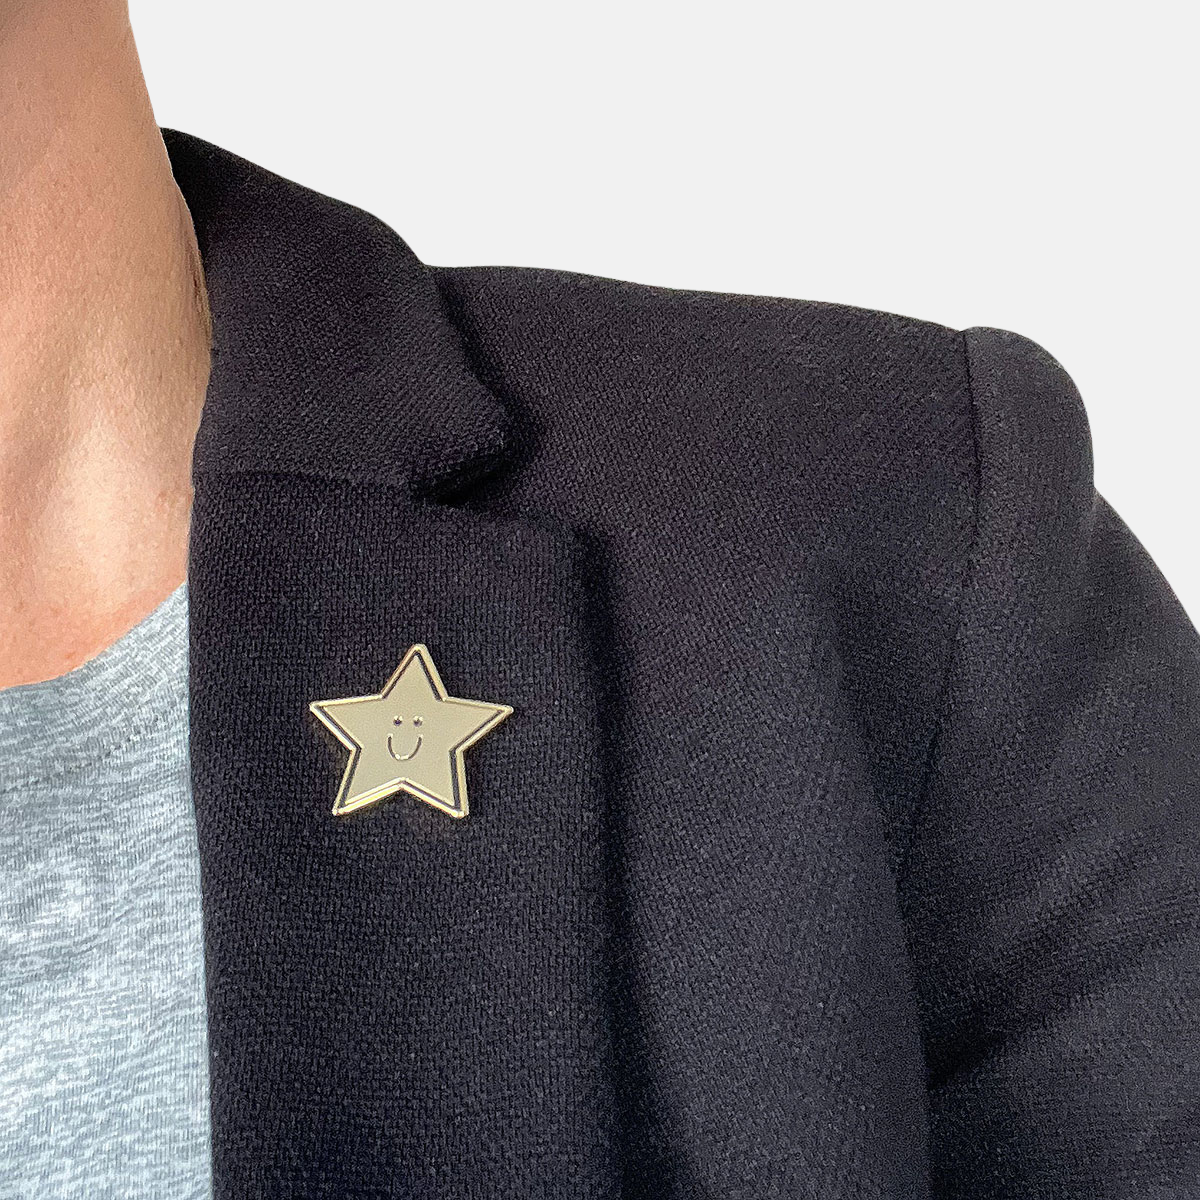 Star Pin on jacket